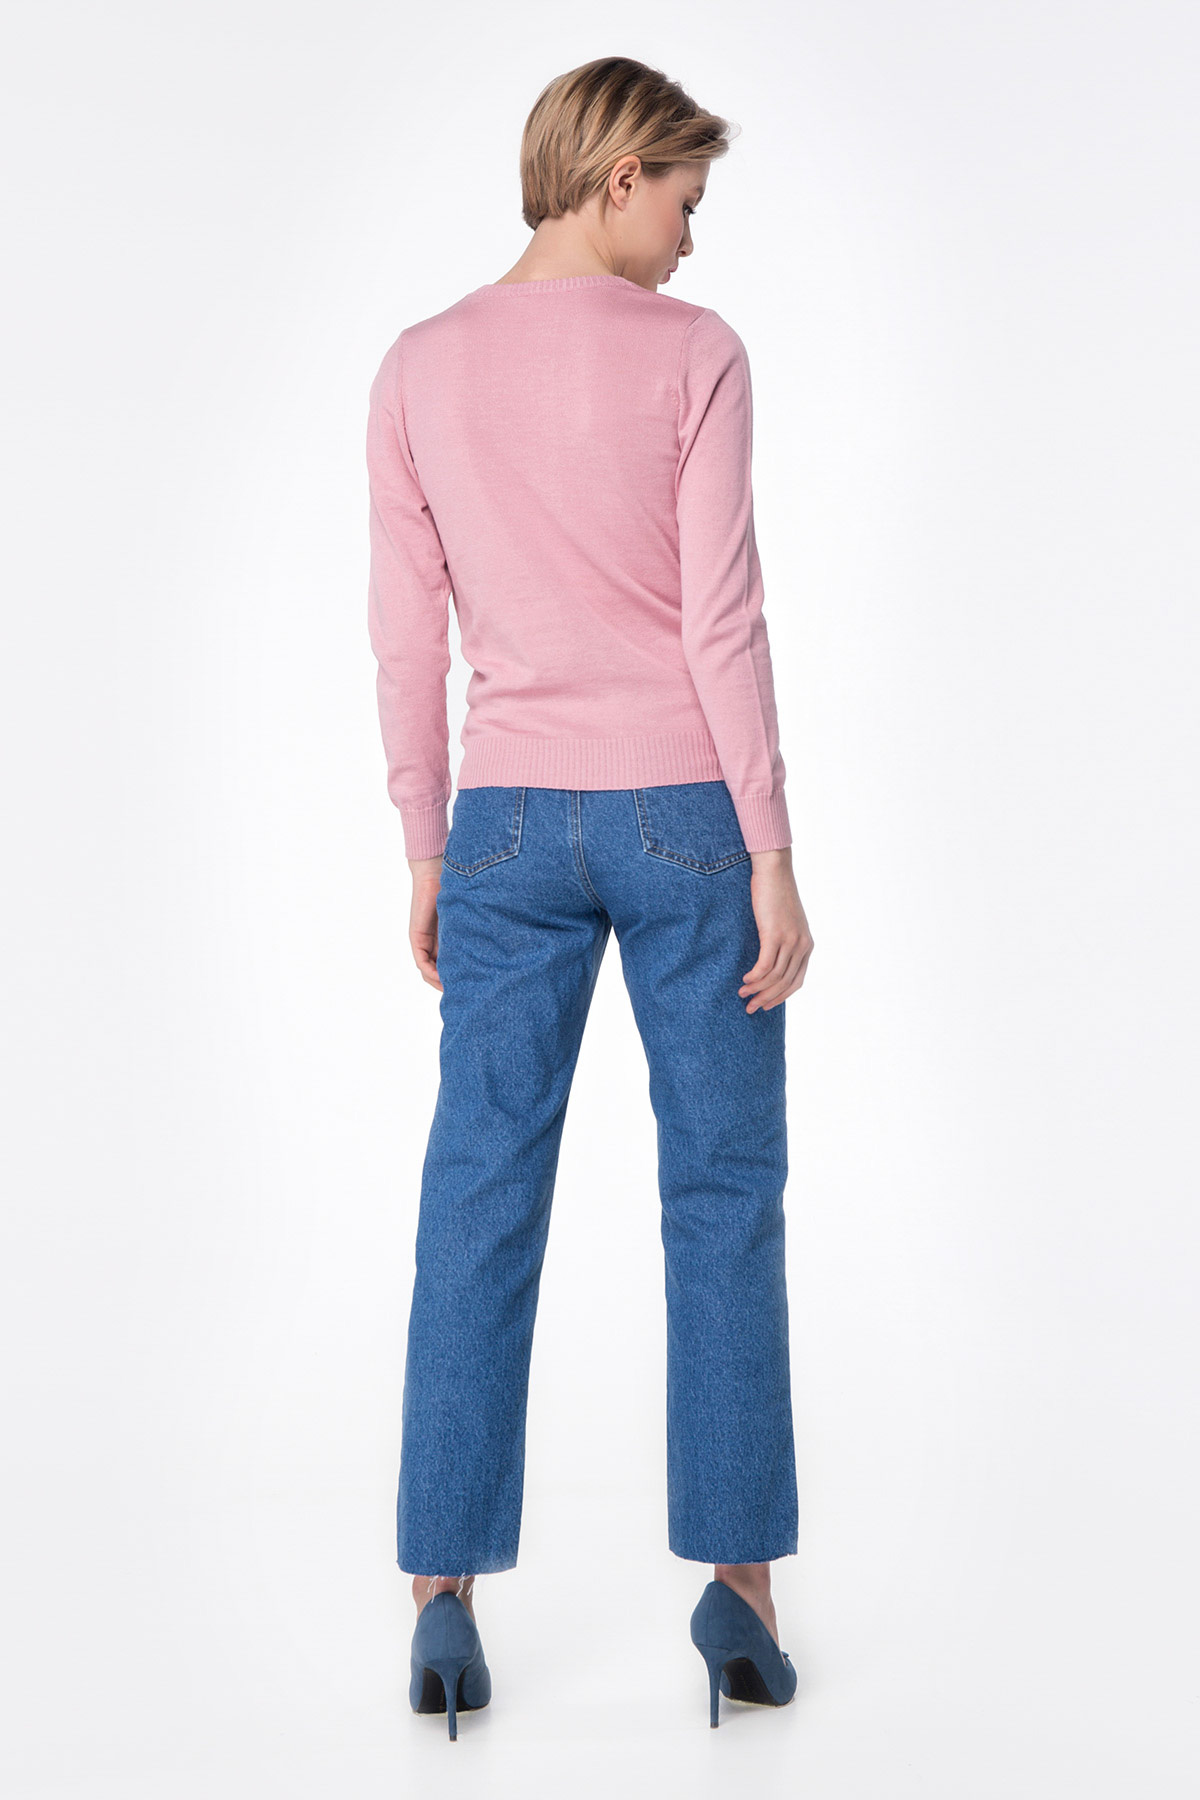 Pink knit jumper, photo 4